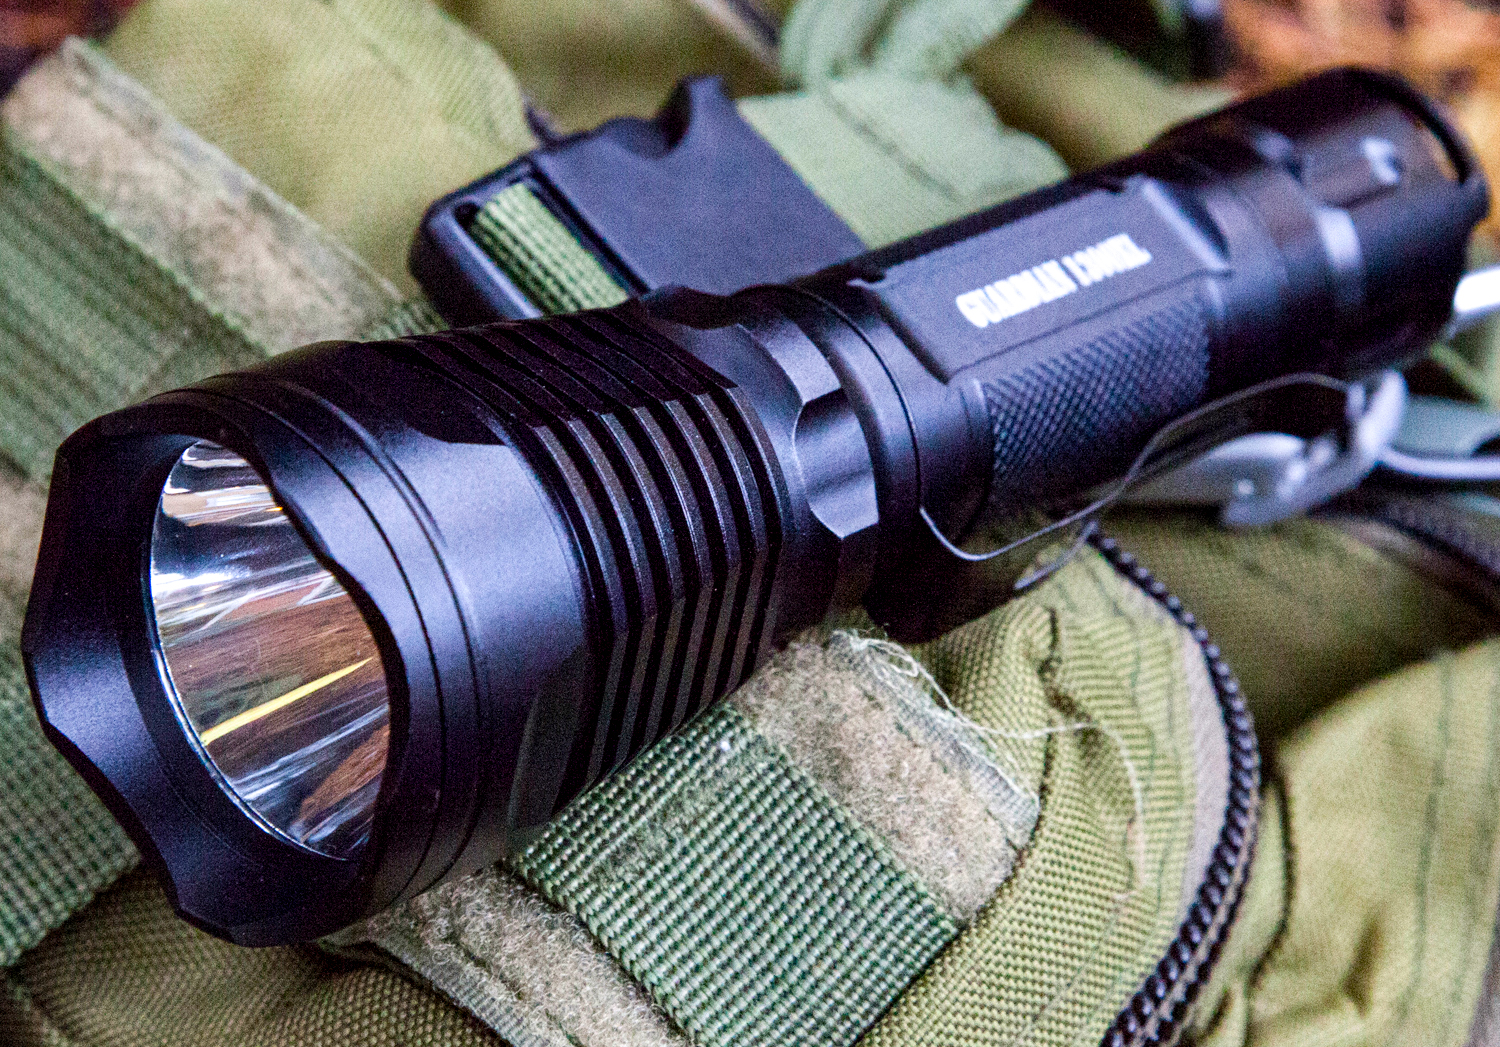 best tactical flashlight